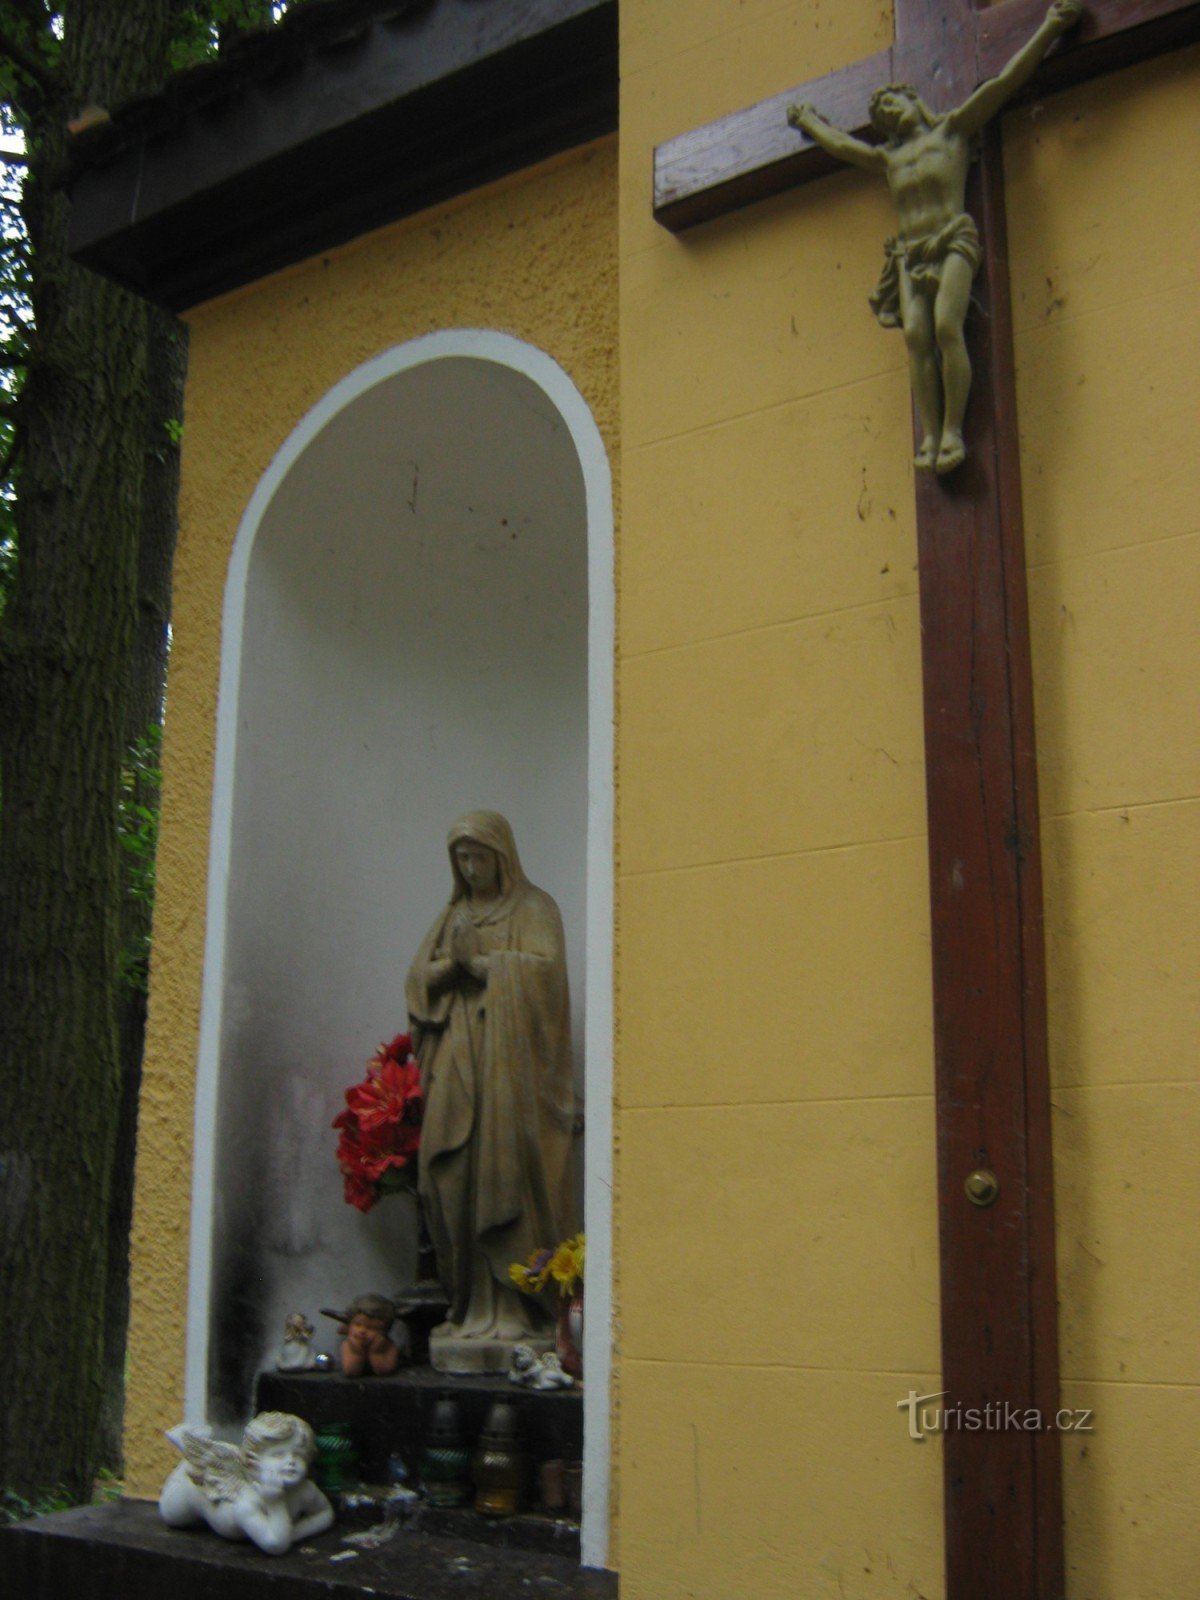 La capela Jirenská